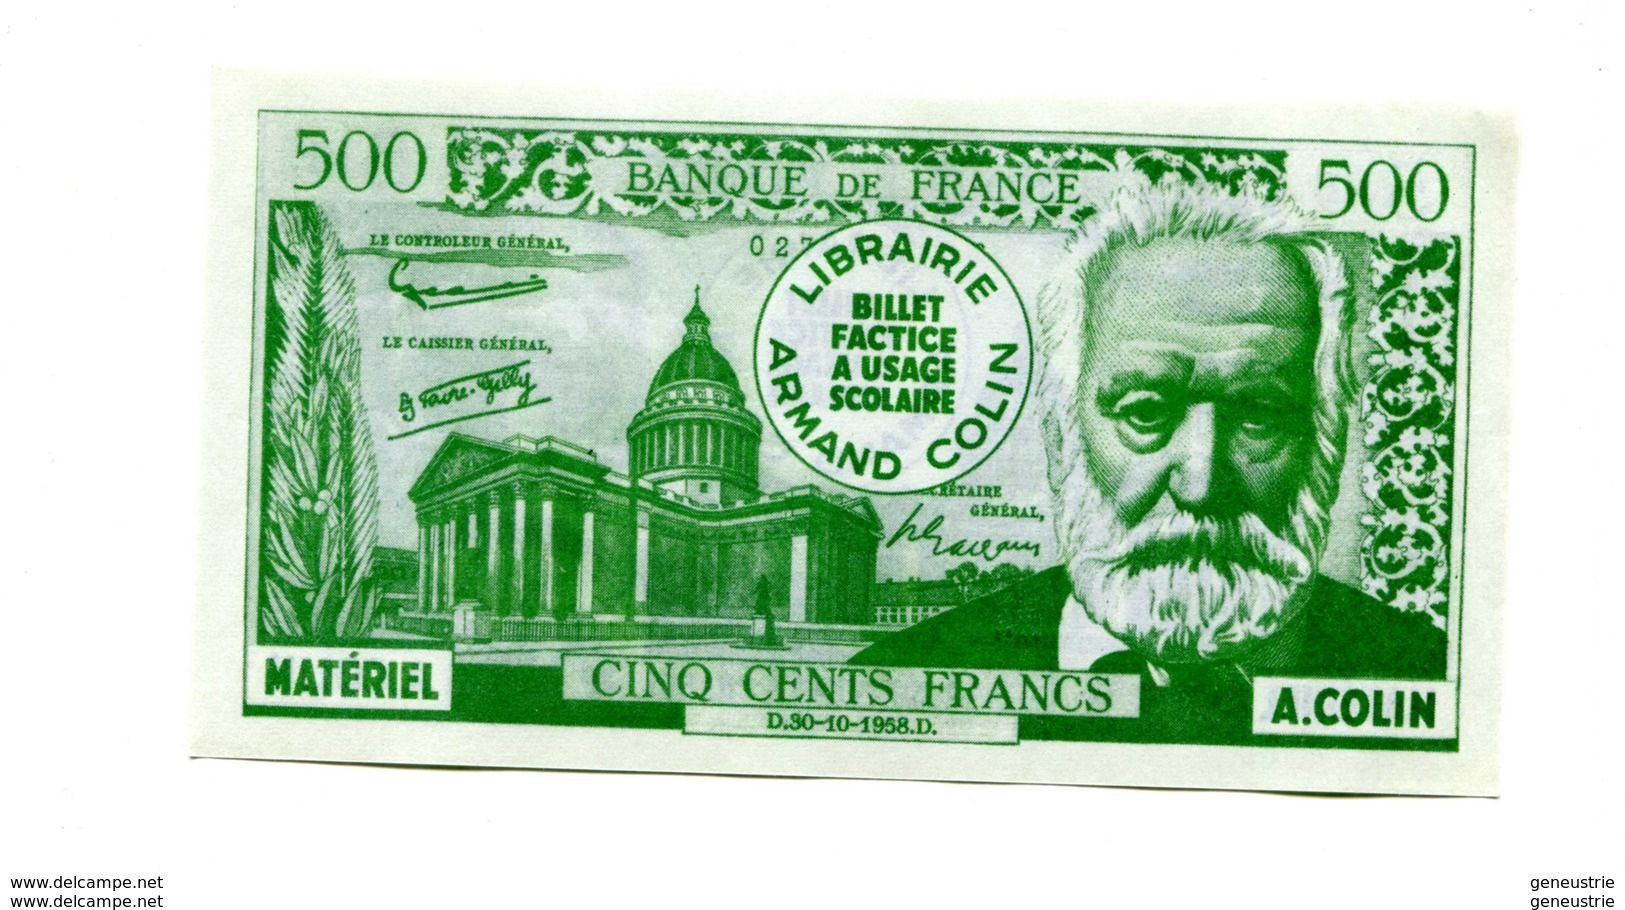 Billet Scolaire école (500F / 5NF Victor Hugo) 1959 - Armand Colin - School Bank Note - Specimen